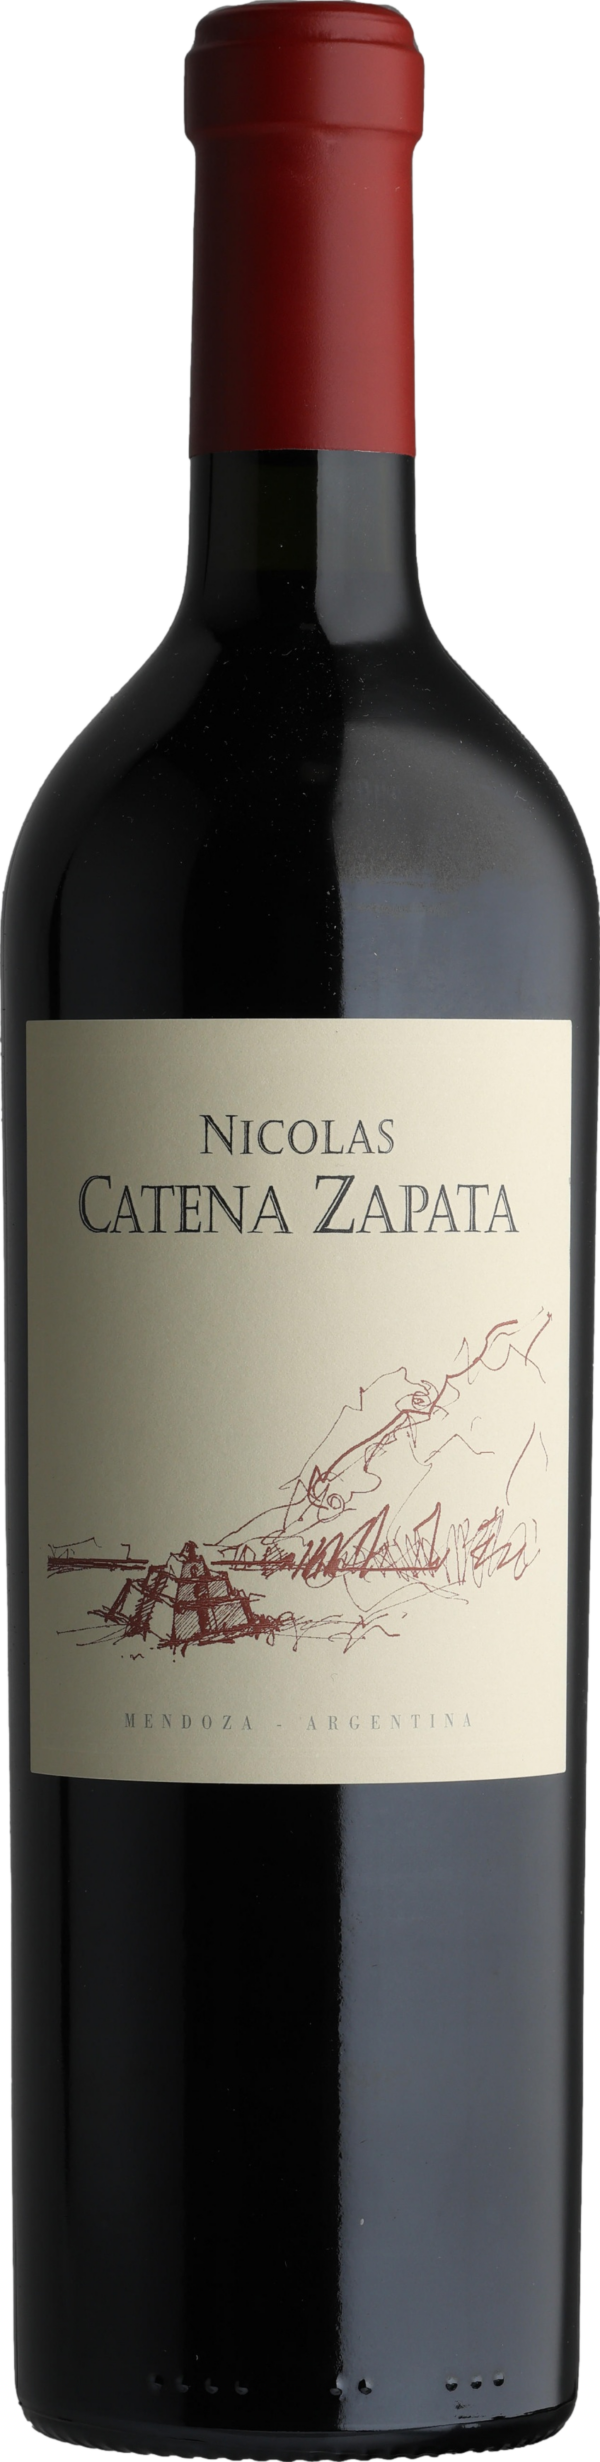 Product image of Catena Zapata Nicolas Catena Zapata 2016 from 8wines